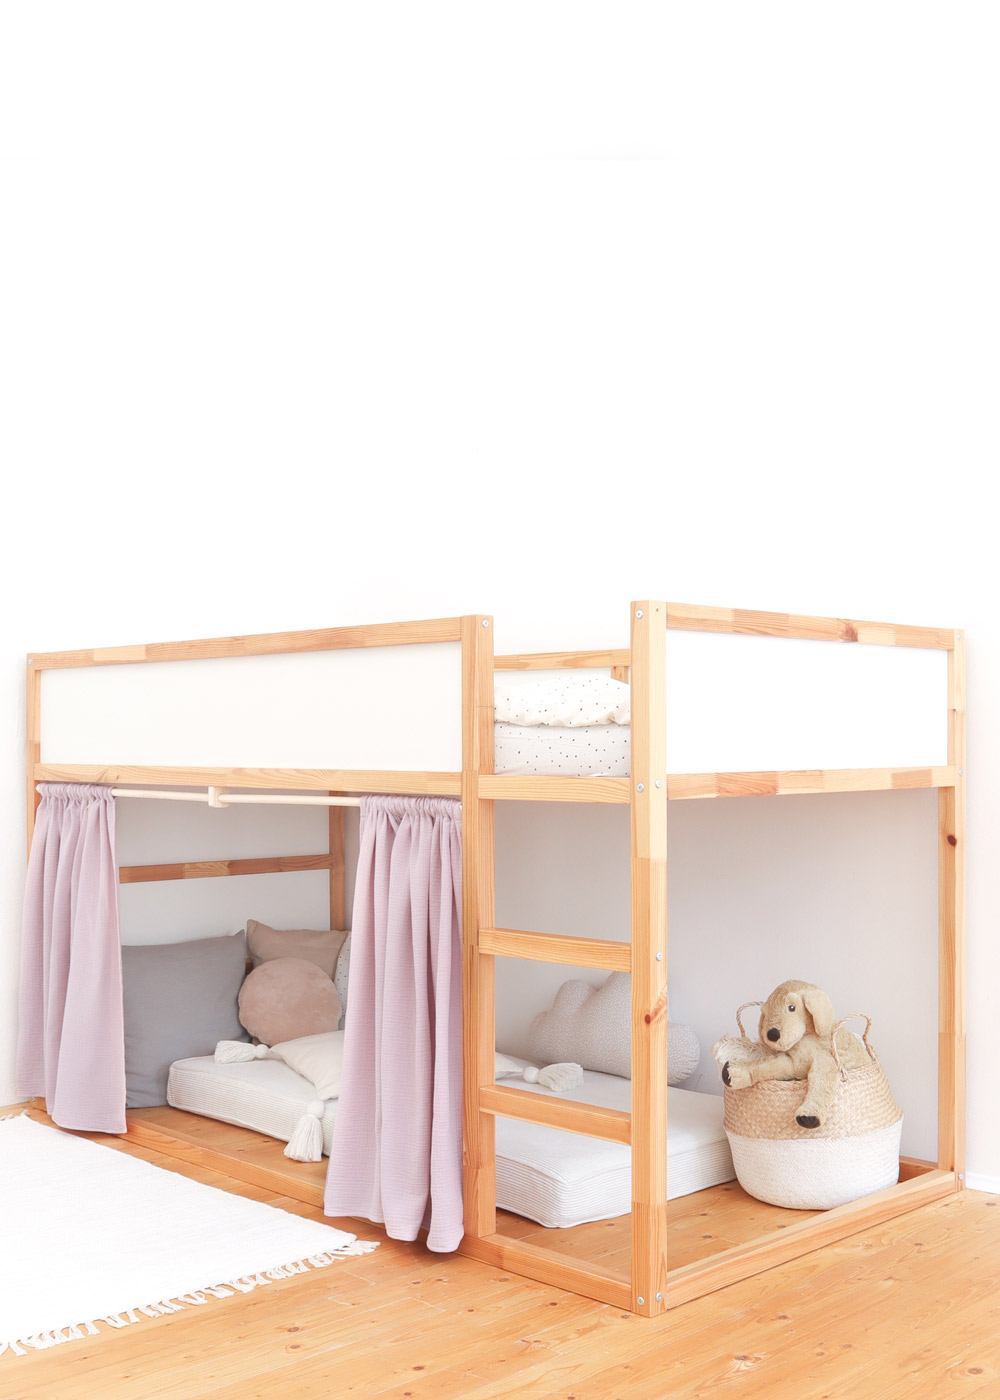 Trojaanse paard eeuw bodem Curtain rod for IKEA KURA bunk bed - 796mm